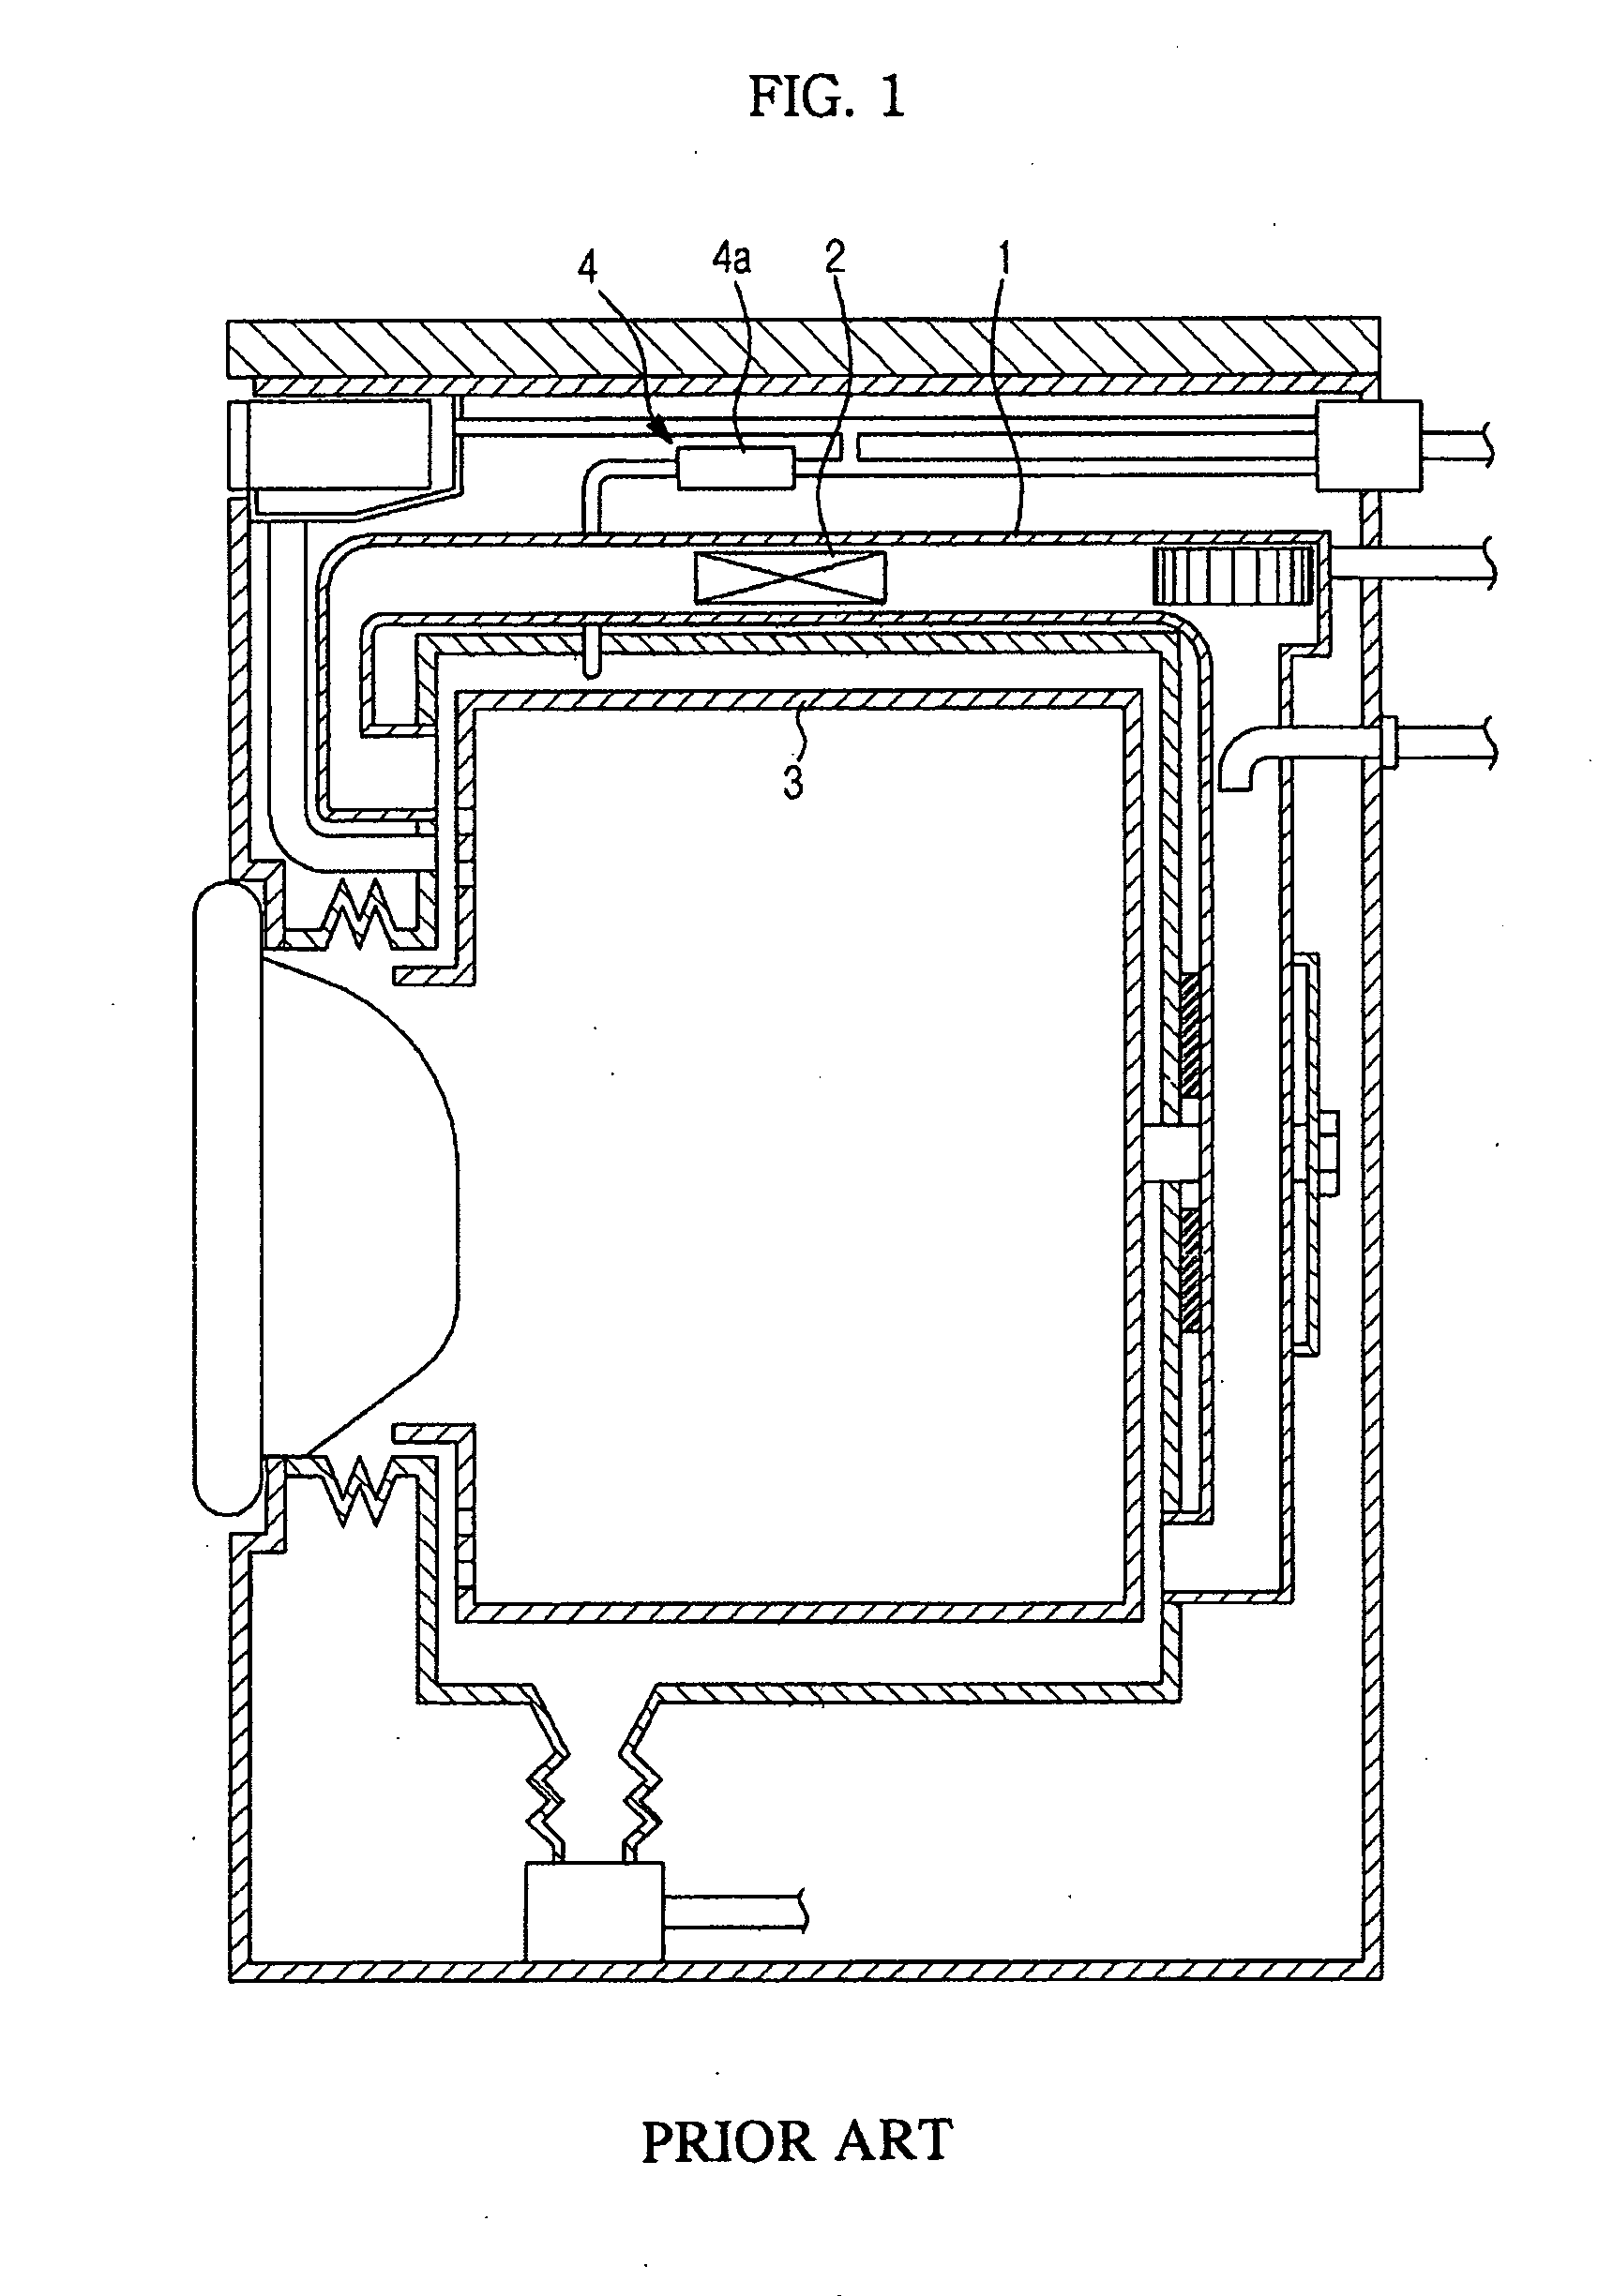 Washing machine with steam generator